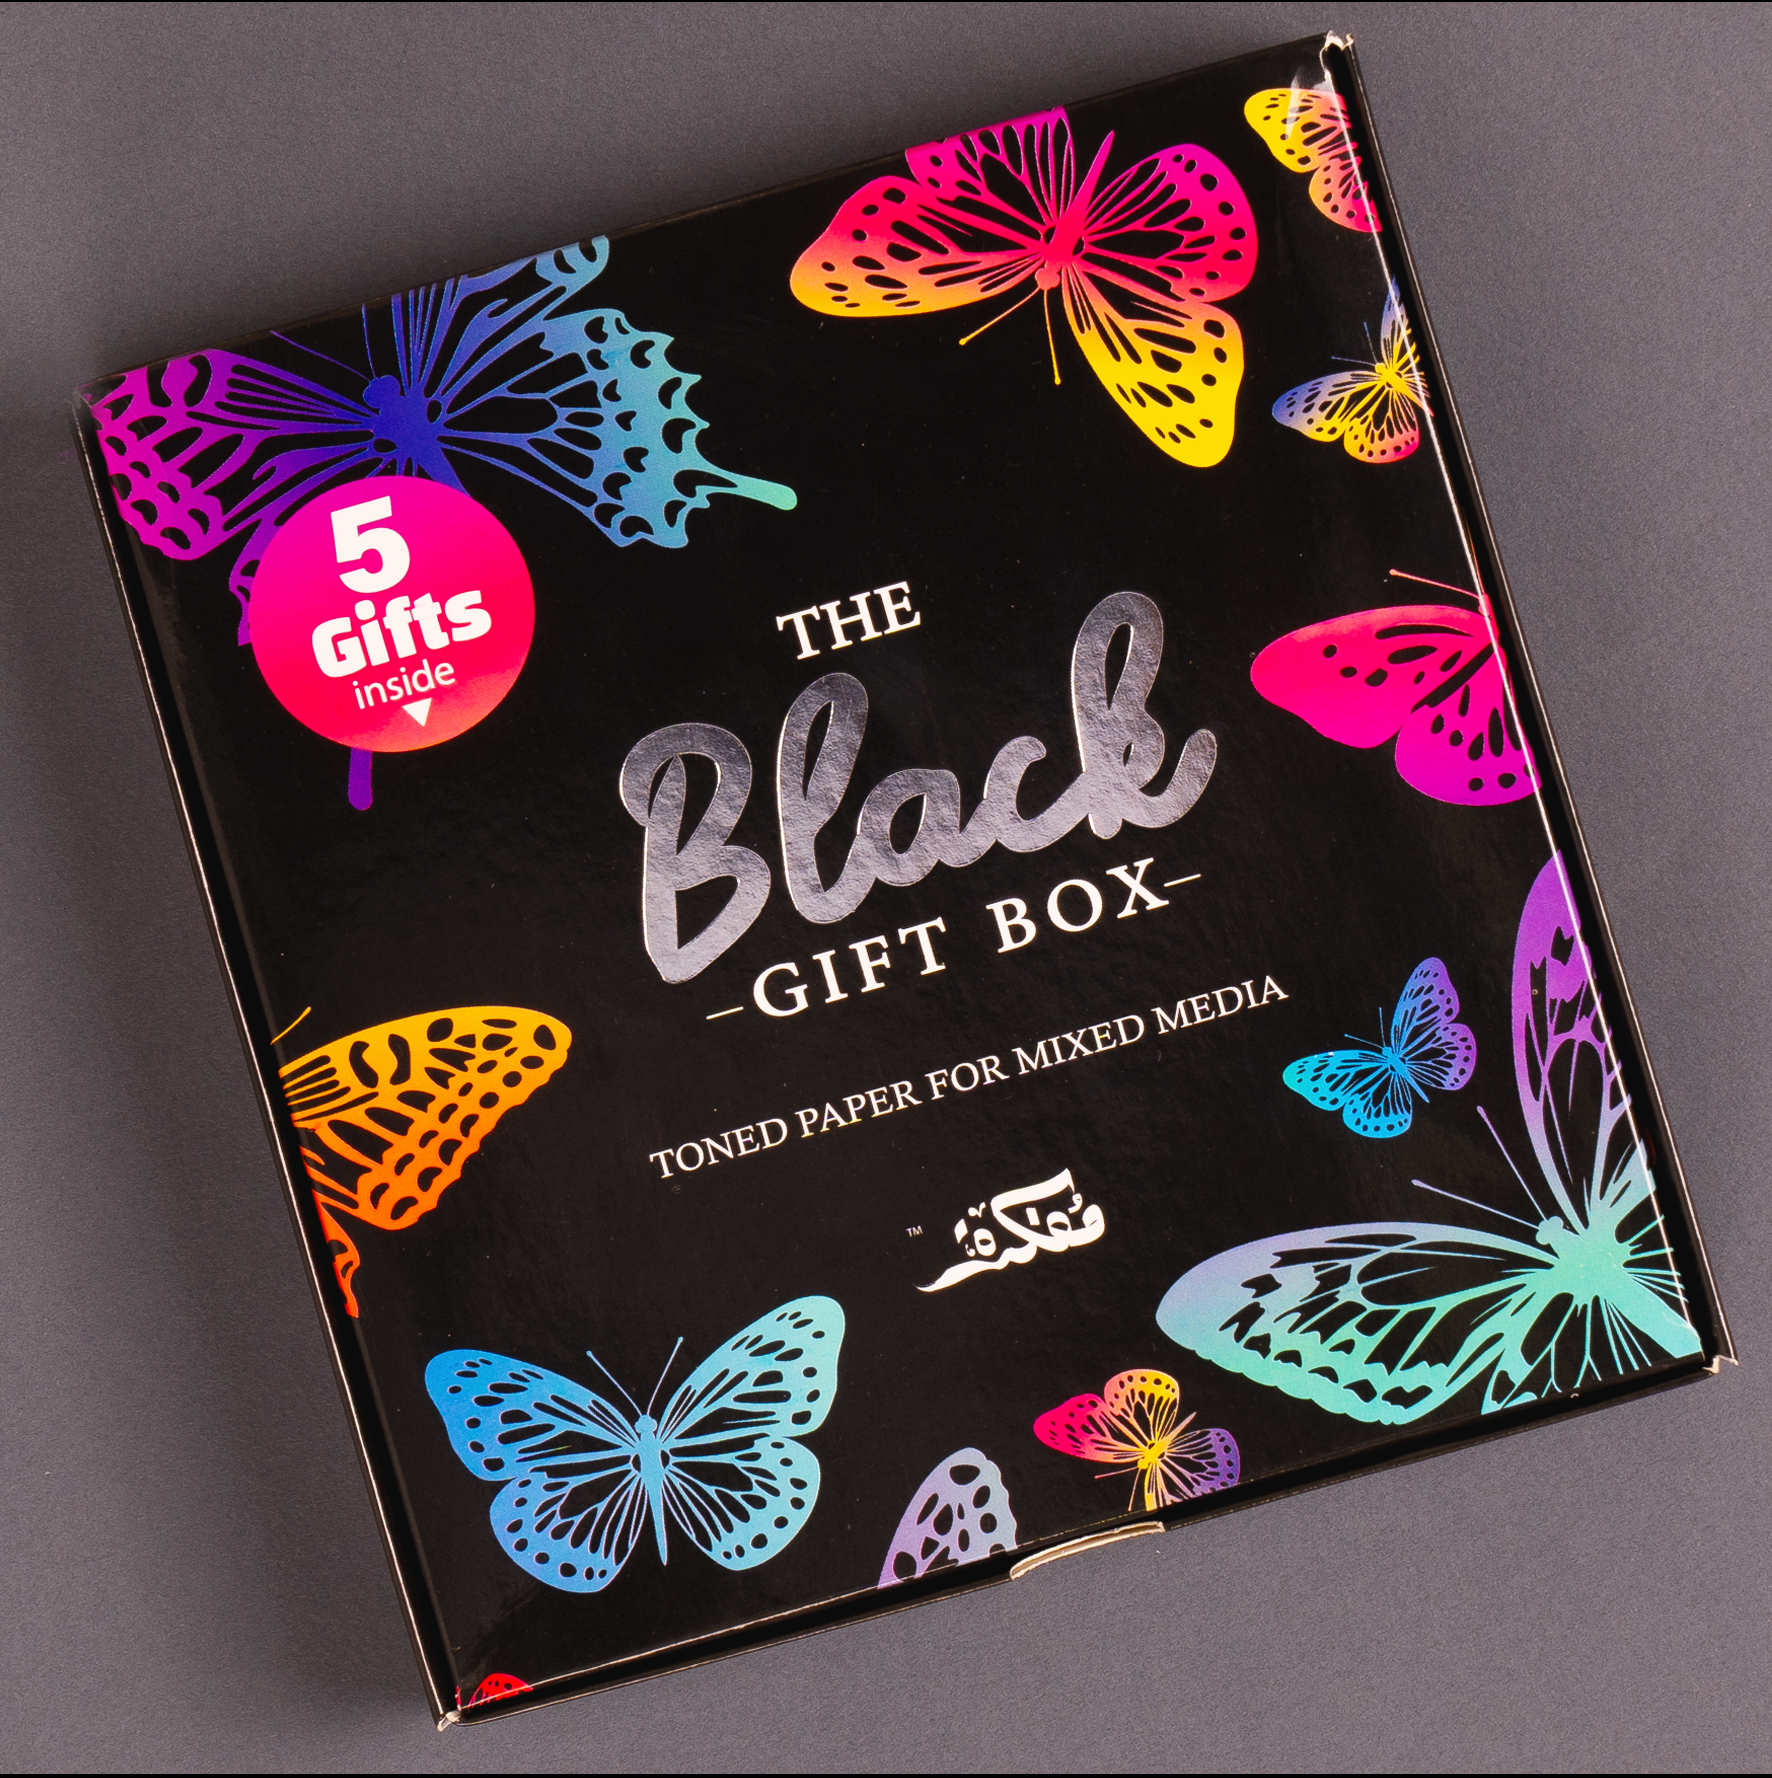 The Black Gift Box